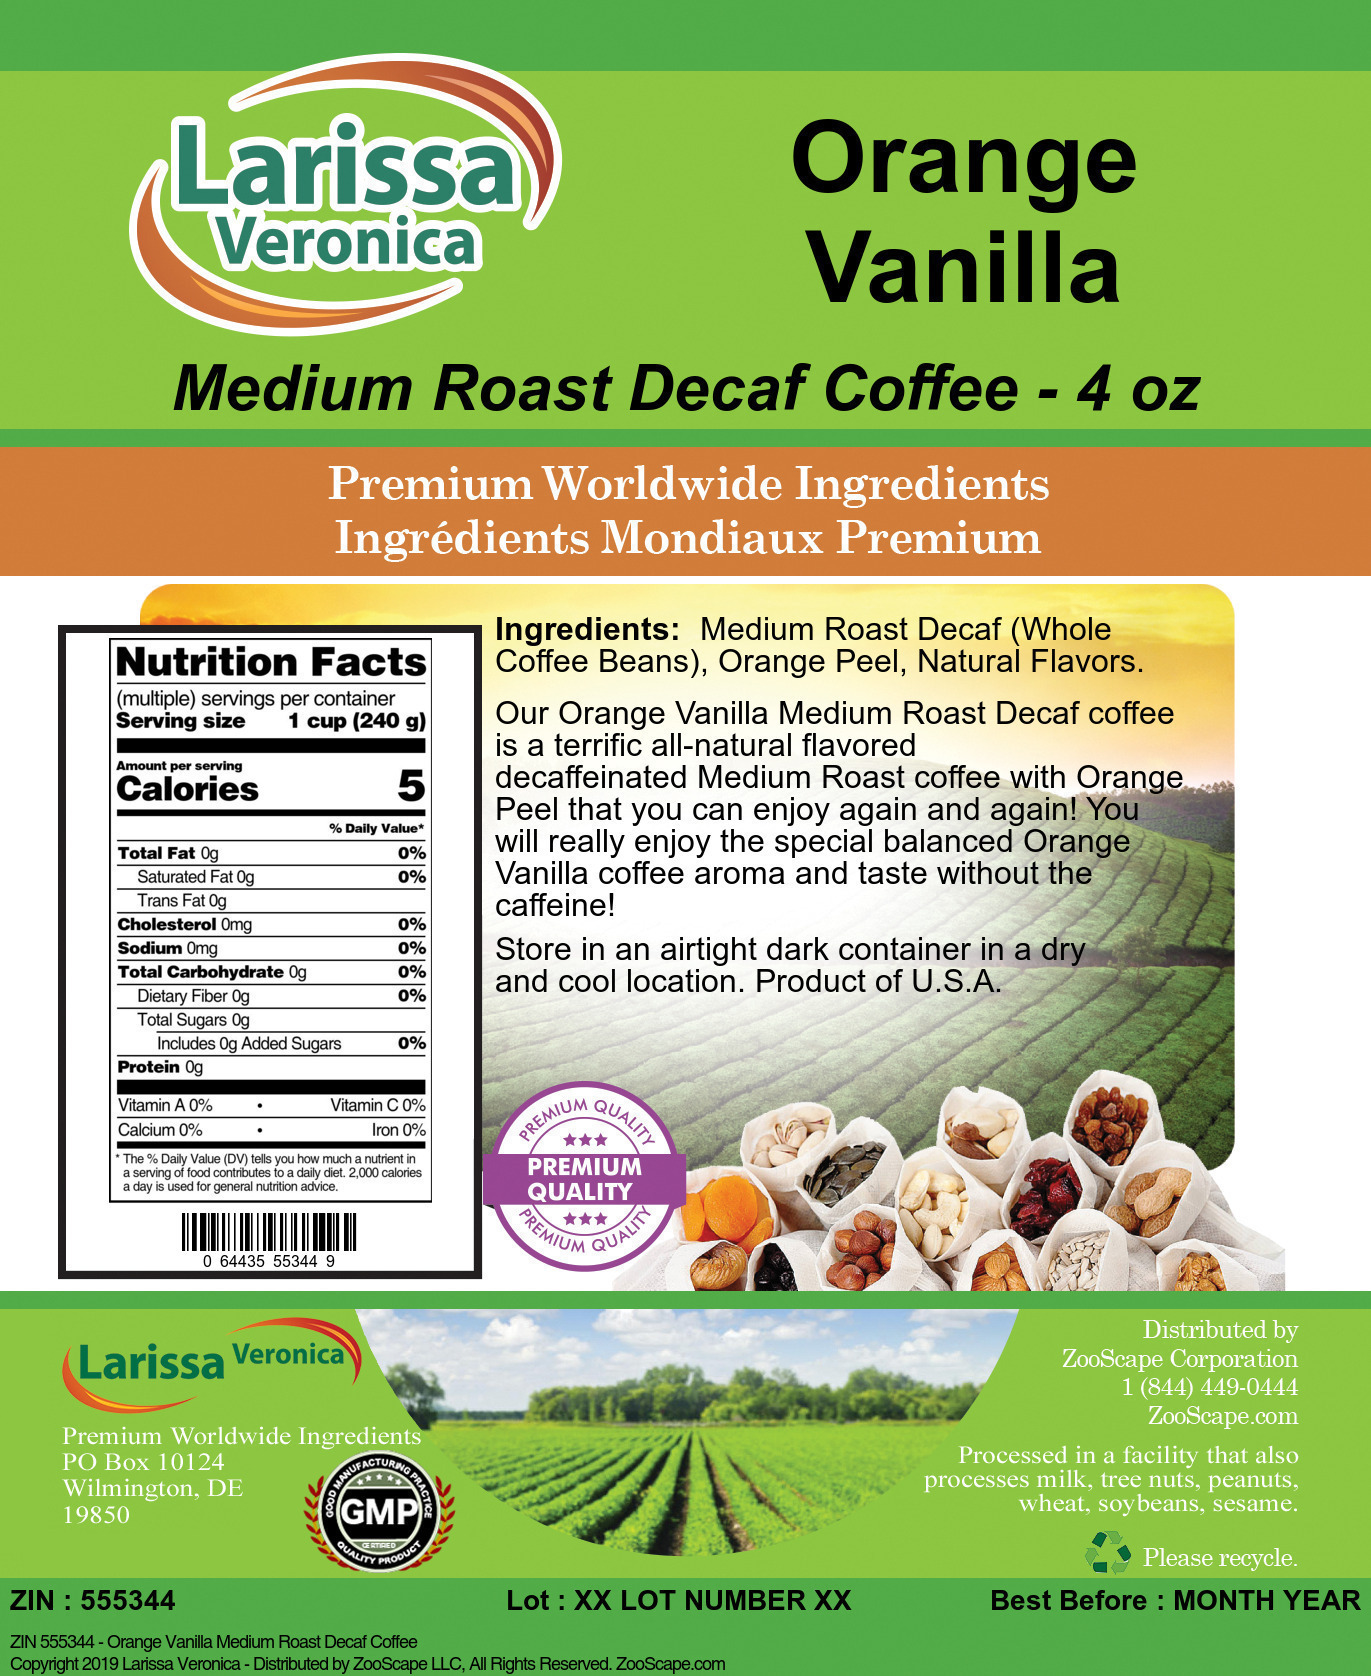 Orange Vanilla Medium Roast Decaf Coffee - Label